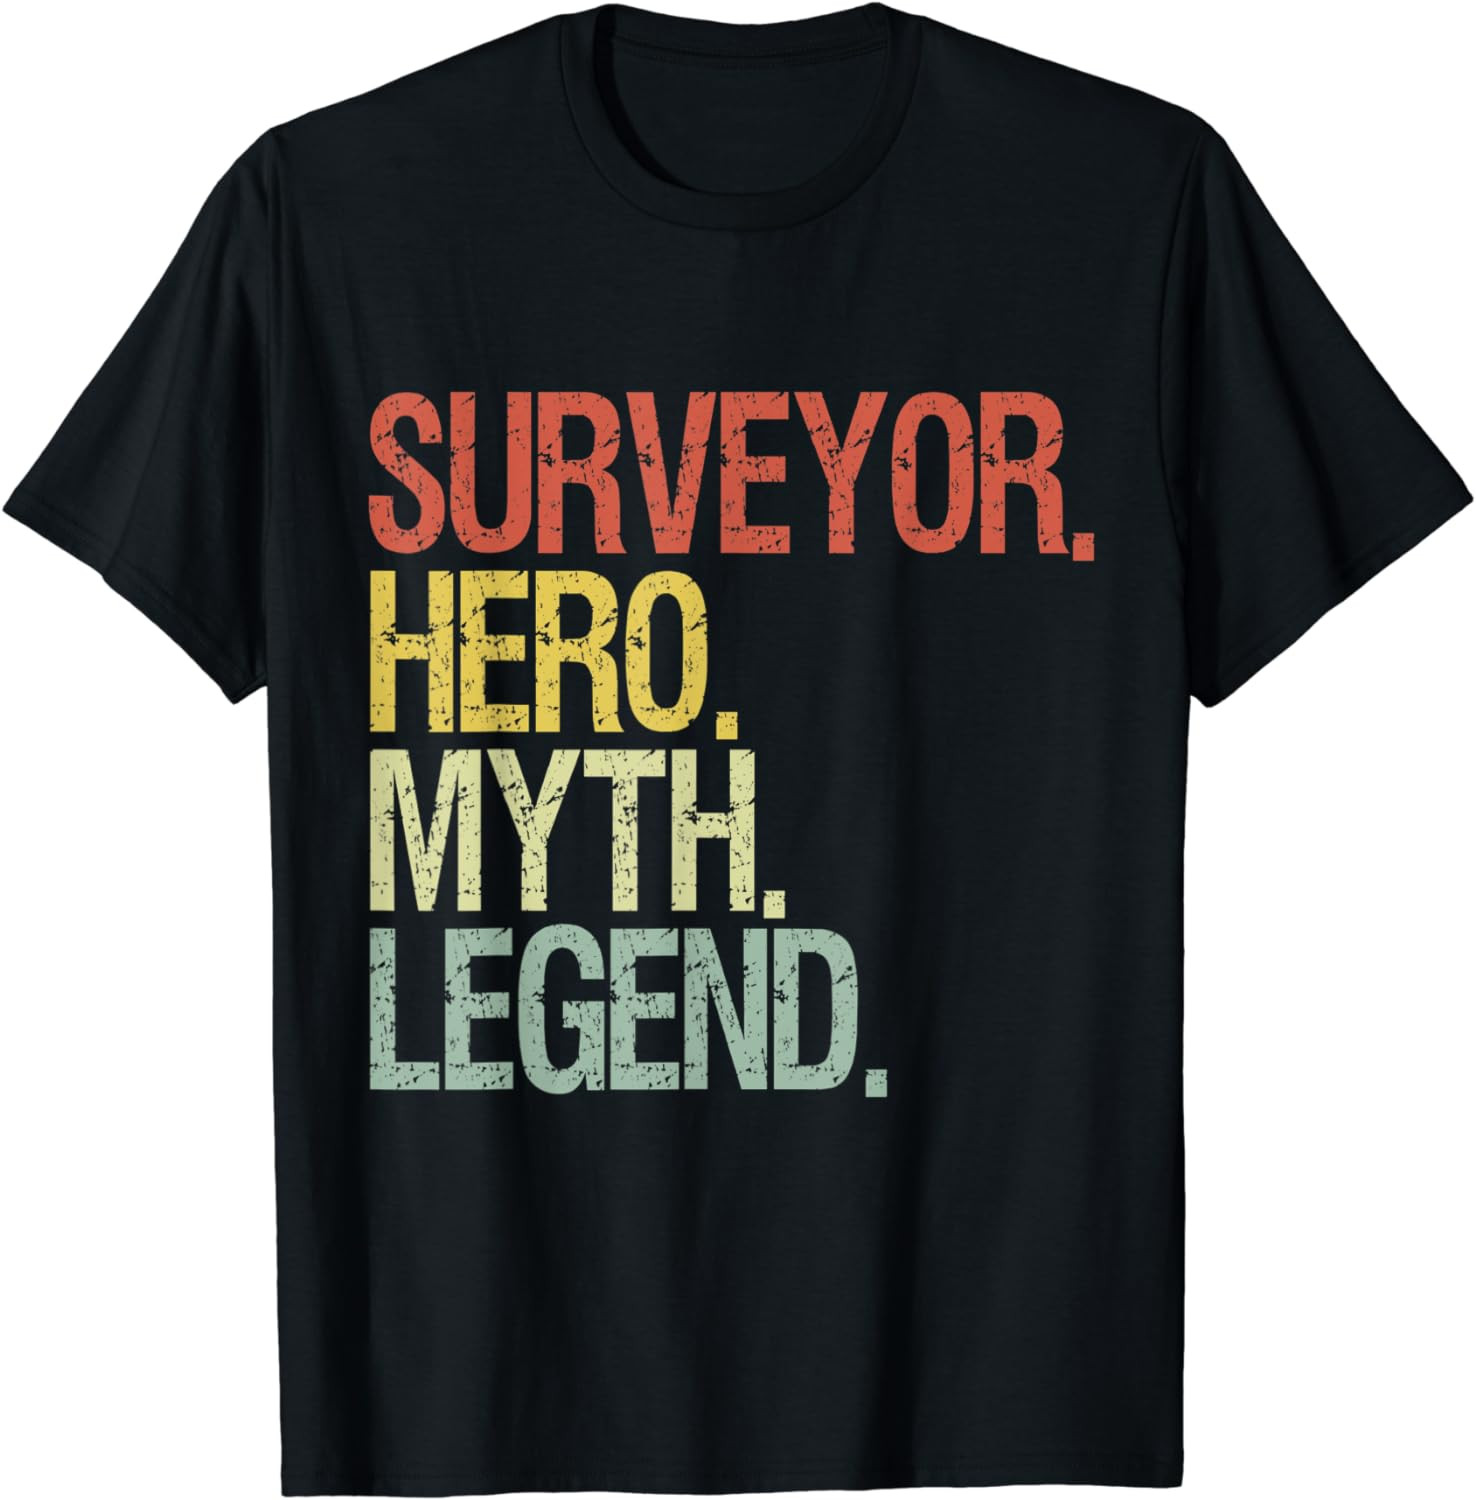 Surveyor Hero Myth Legend T-Shirt